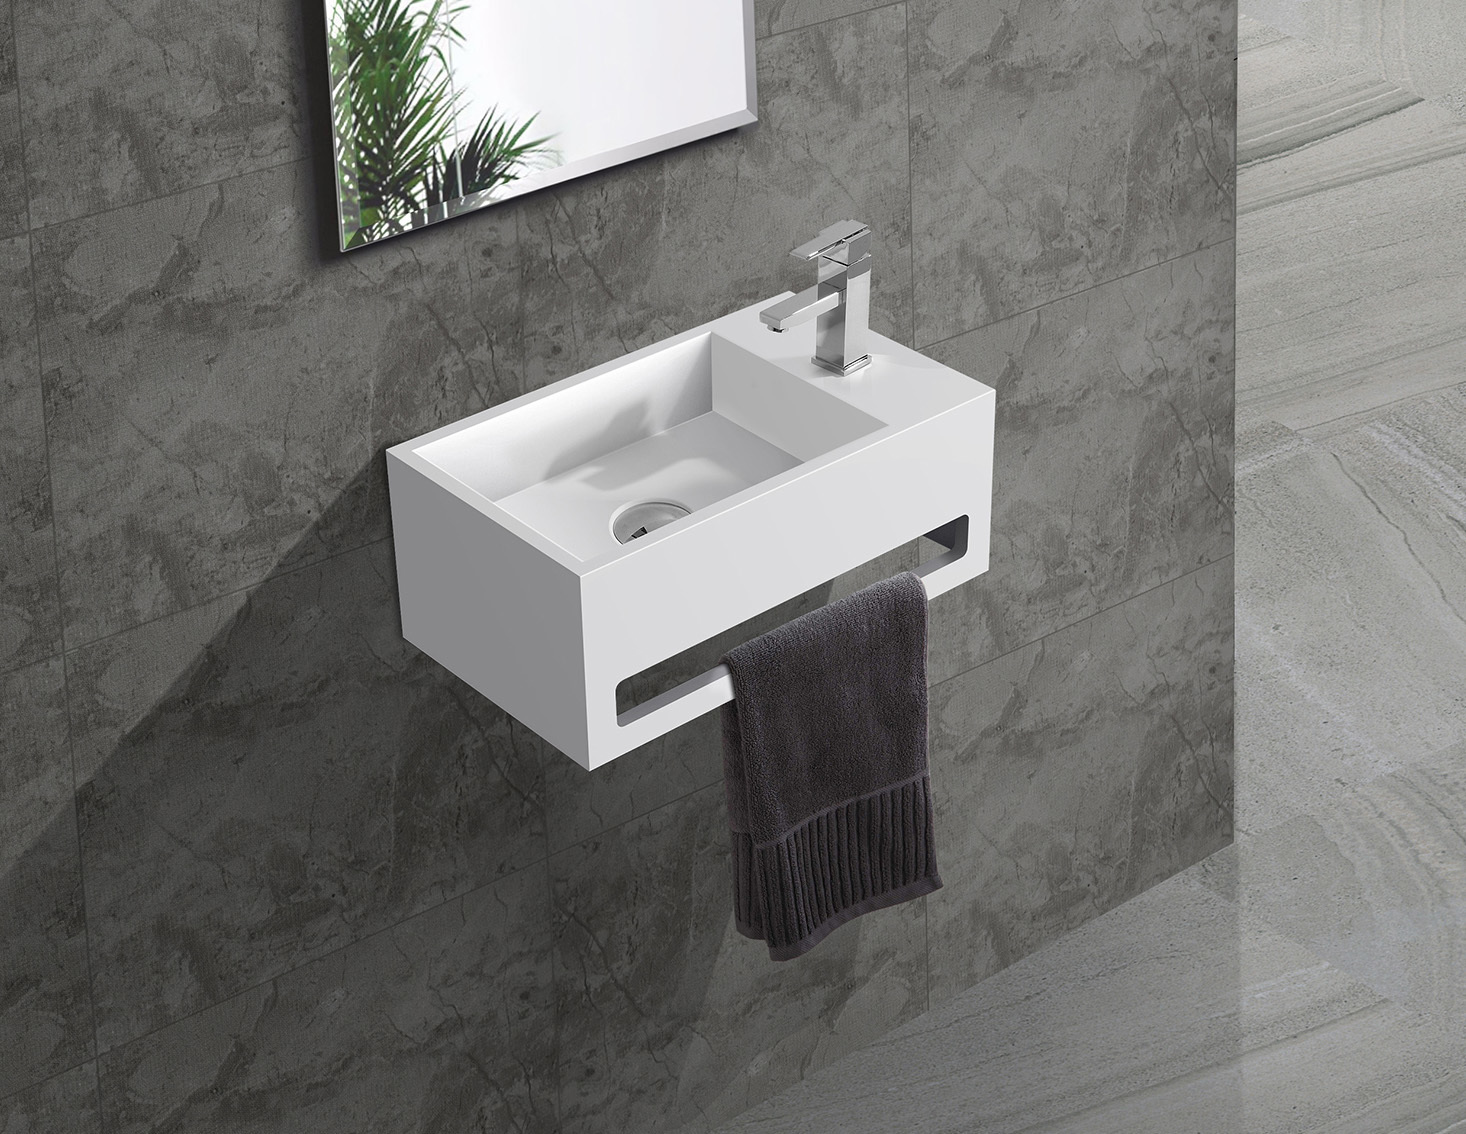 KingKonree mounted wall basin marble for toilet